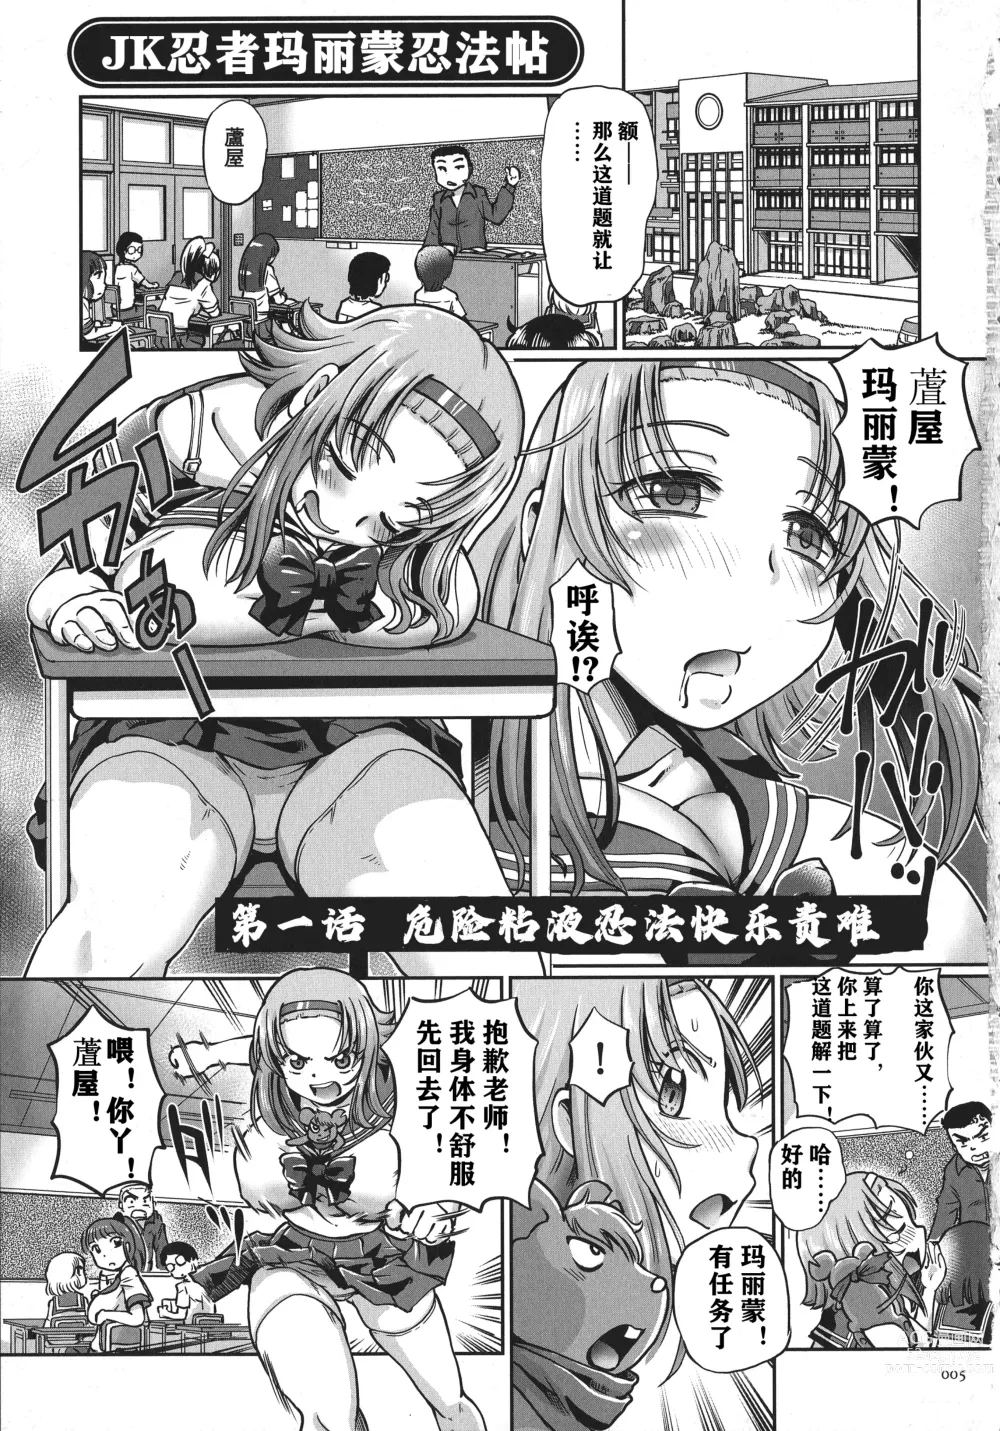 Page 6 of manga JK Ninja Marimo Ninpouchou